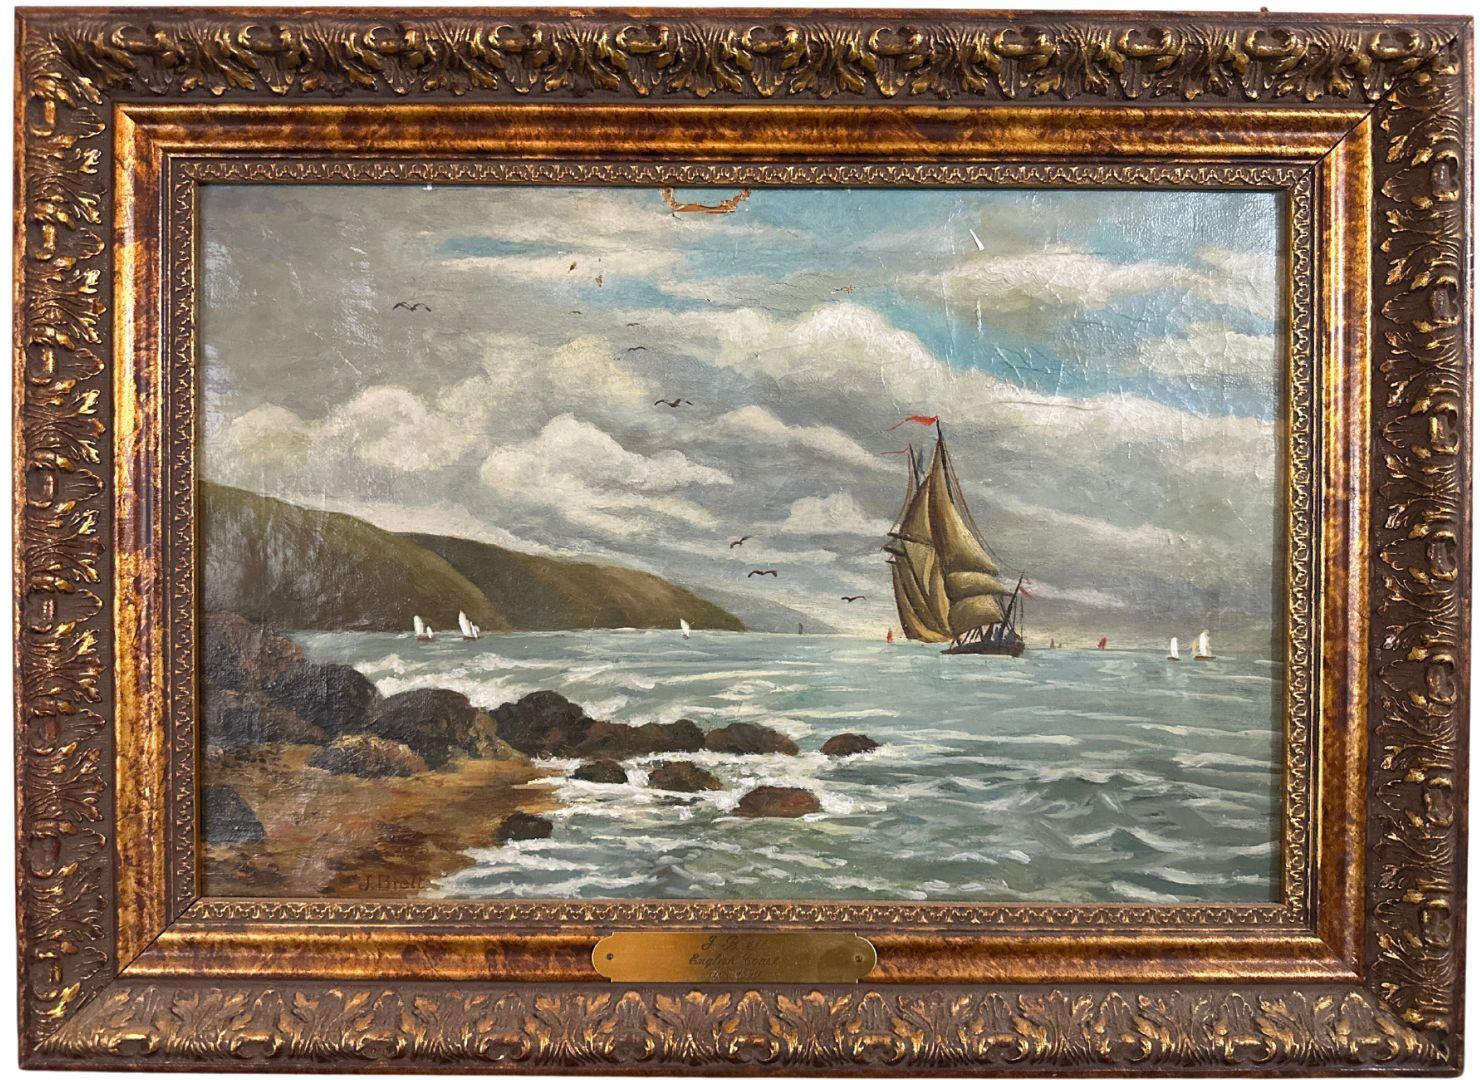 John Brett Landscape Painting – Seafaring Tranquility: Eine präraffaelitische Szene, Ölgemälde auf Leinwand, signiert